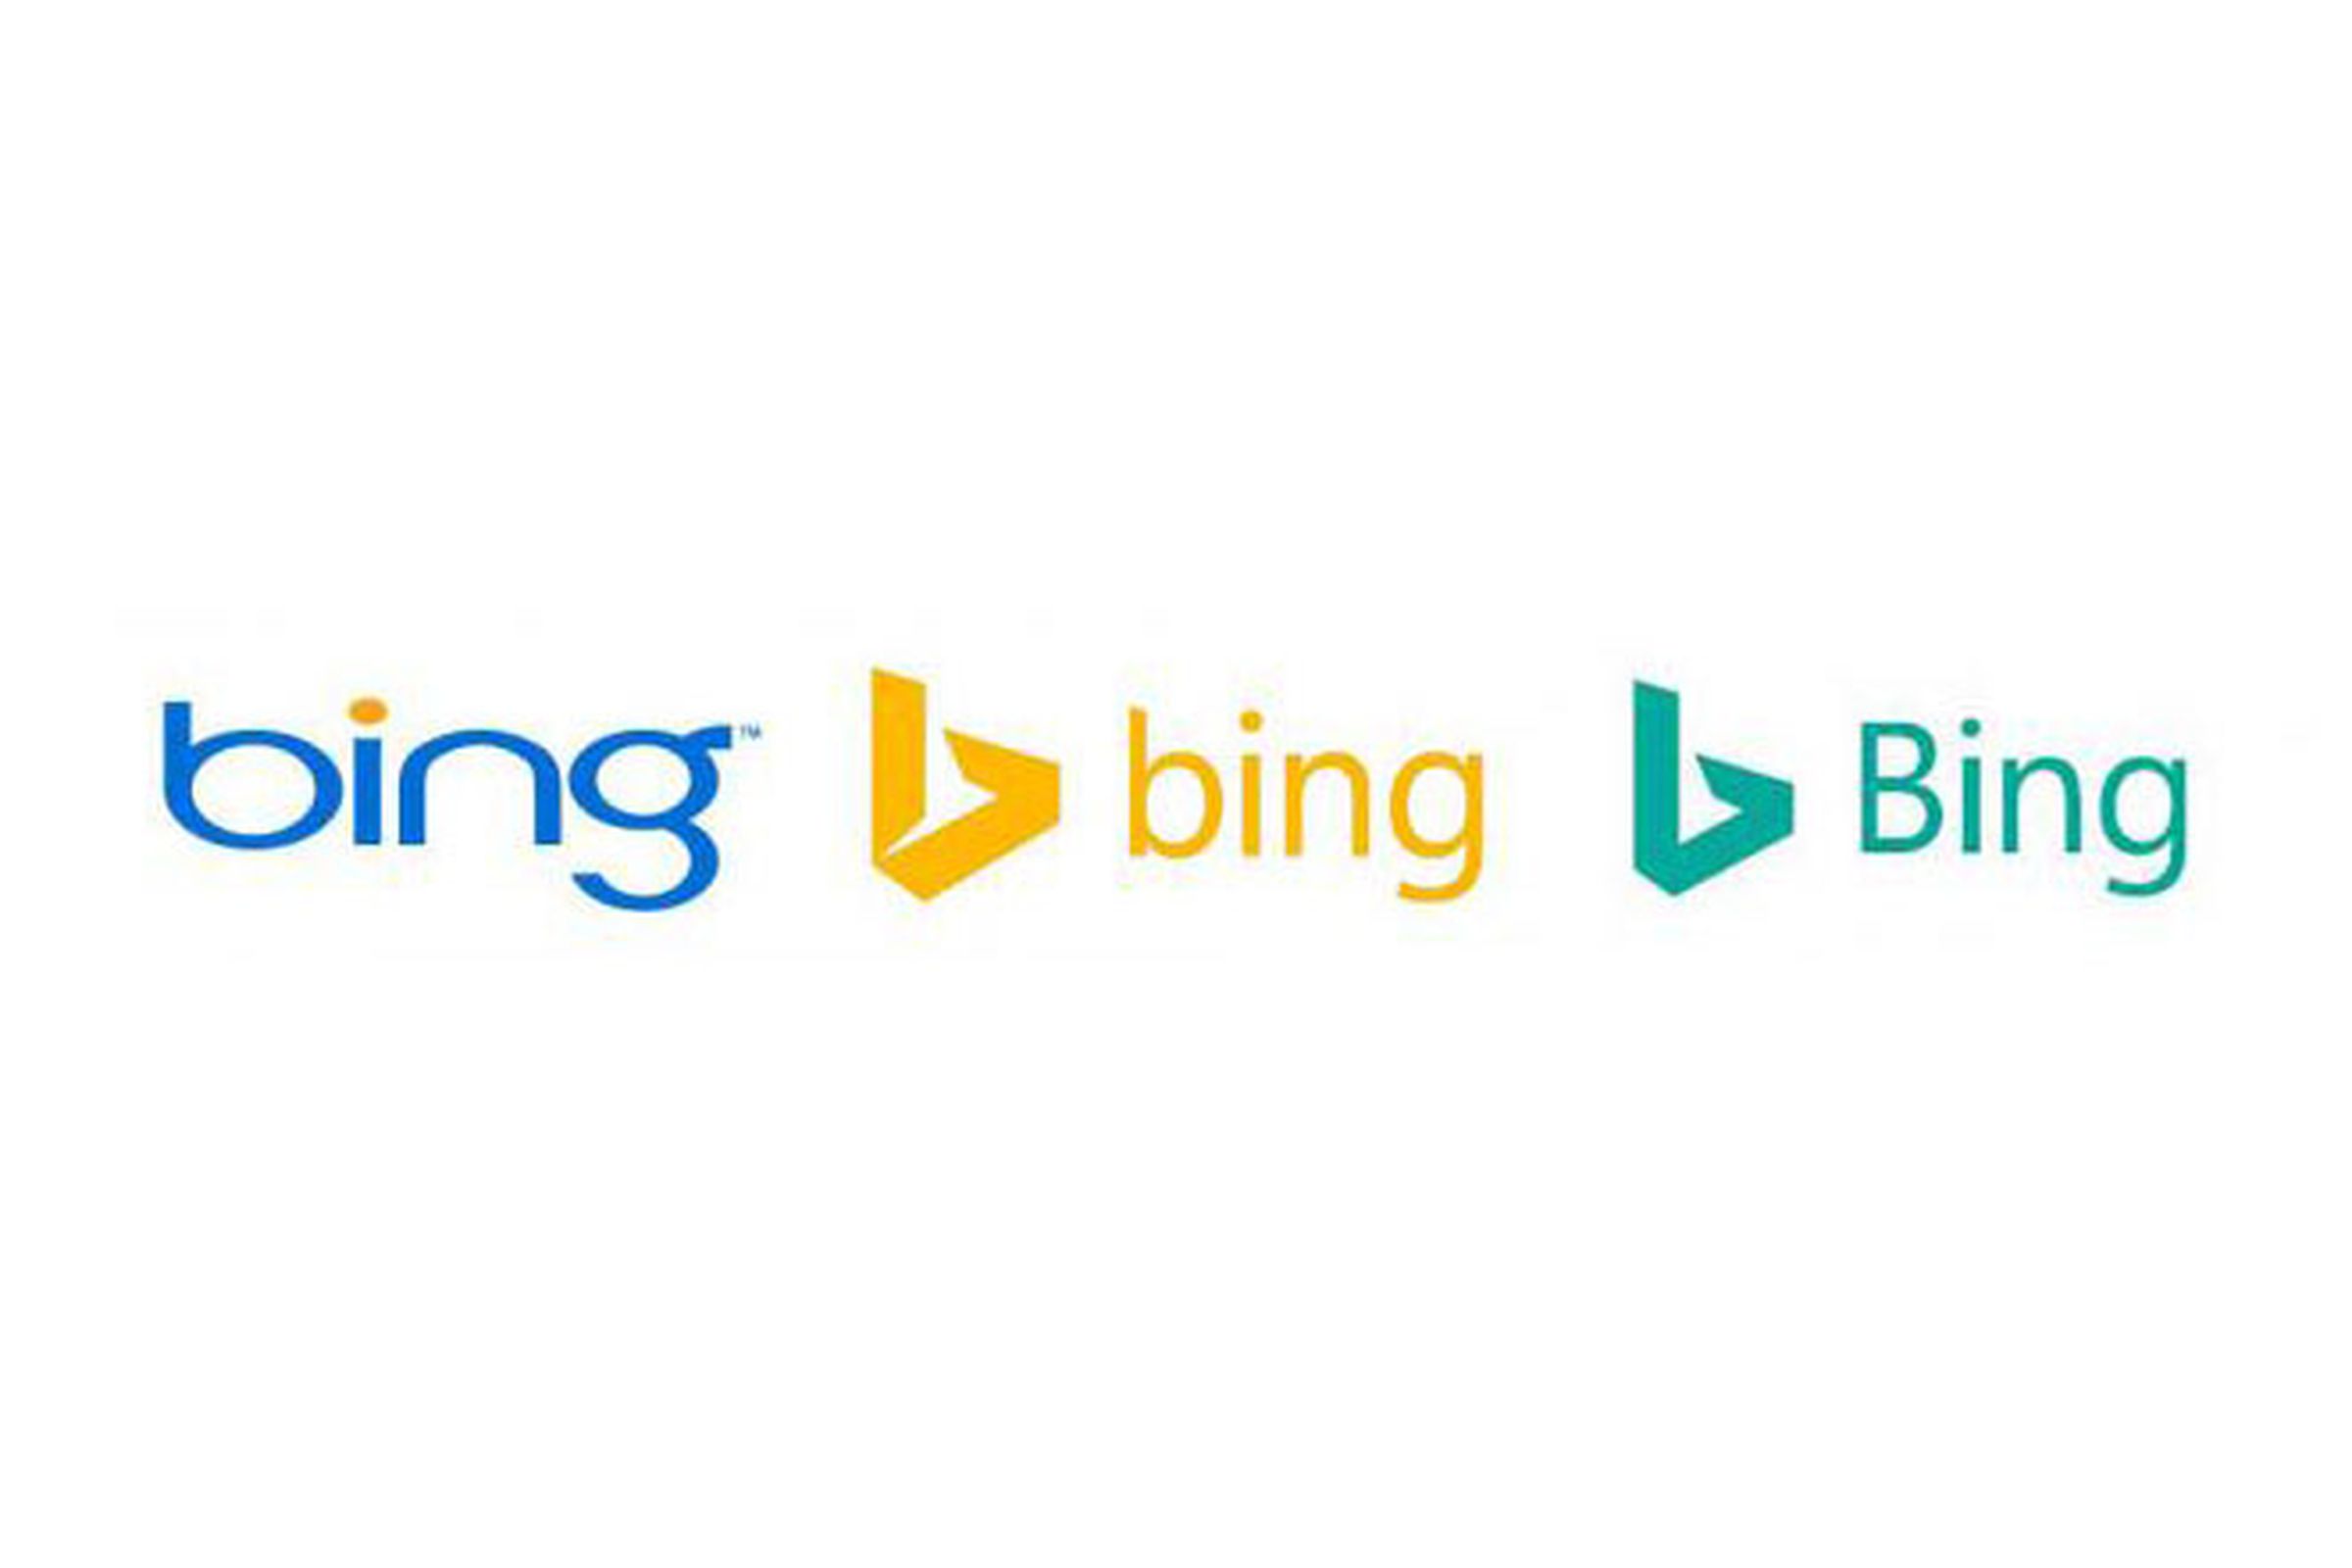 Bing apis. Bing Поисковая система. Логотип поисковой системы бинг. Binn. Microsoft Bing логотип.